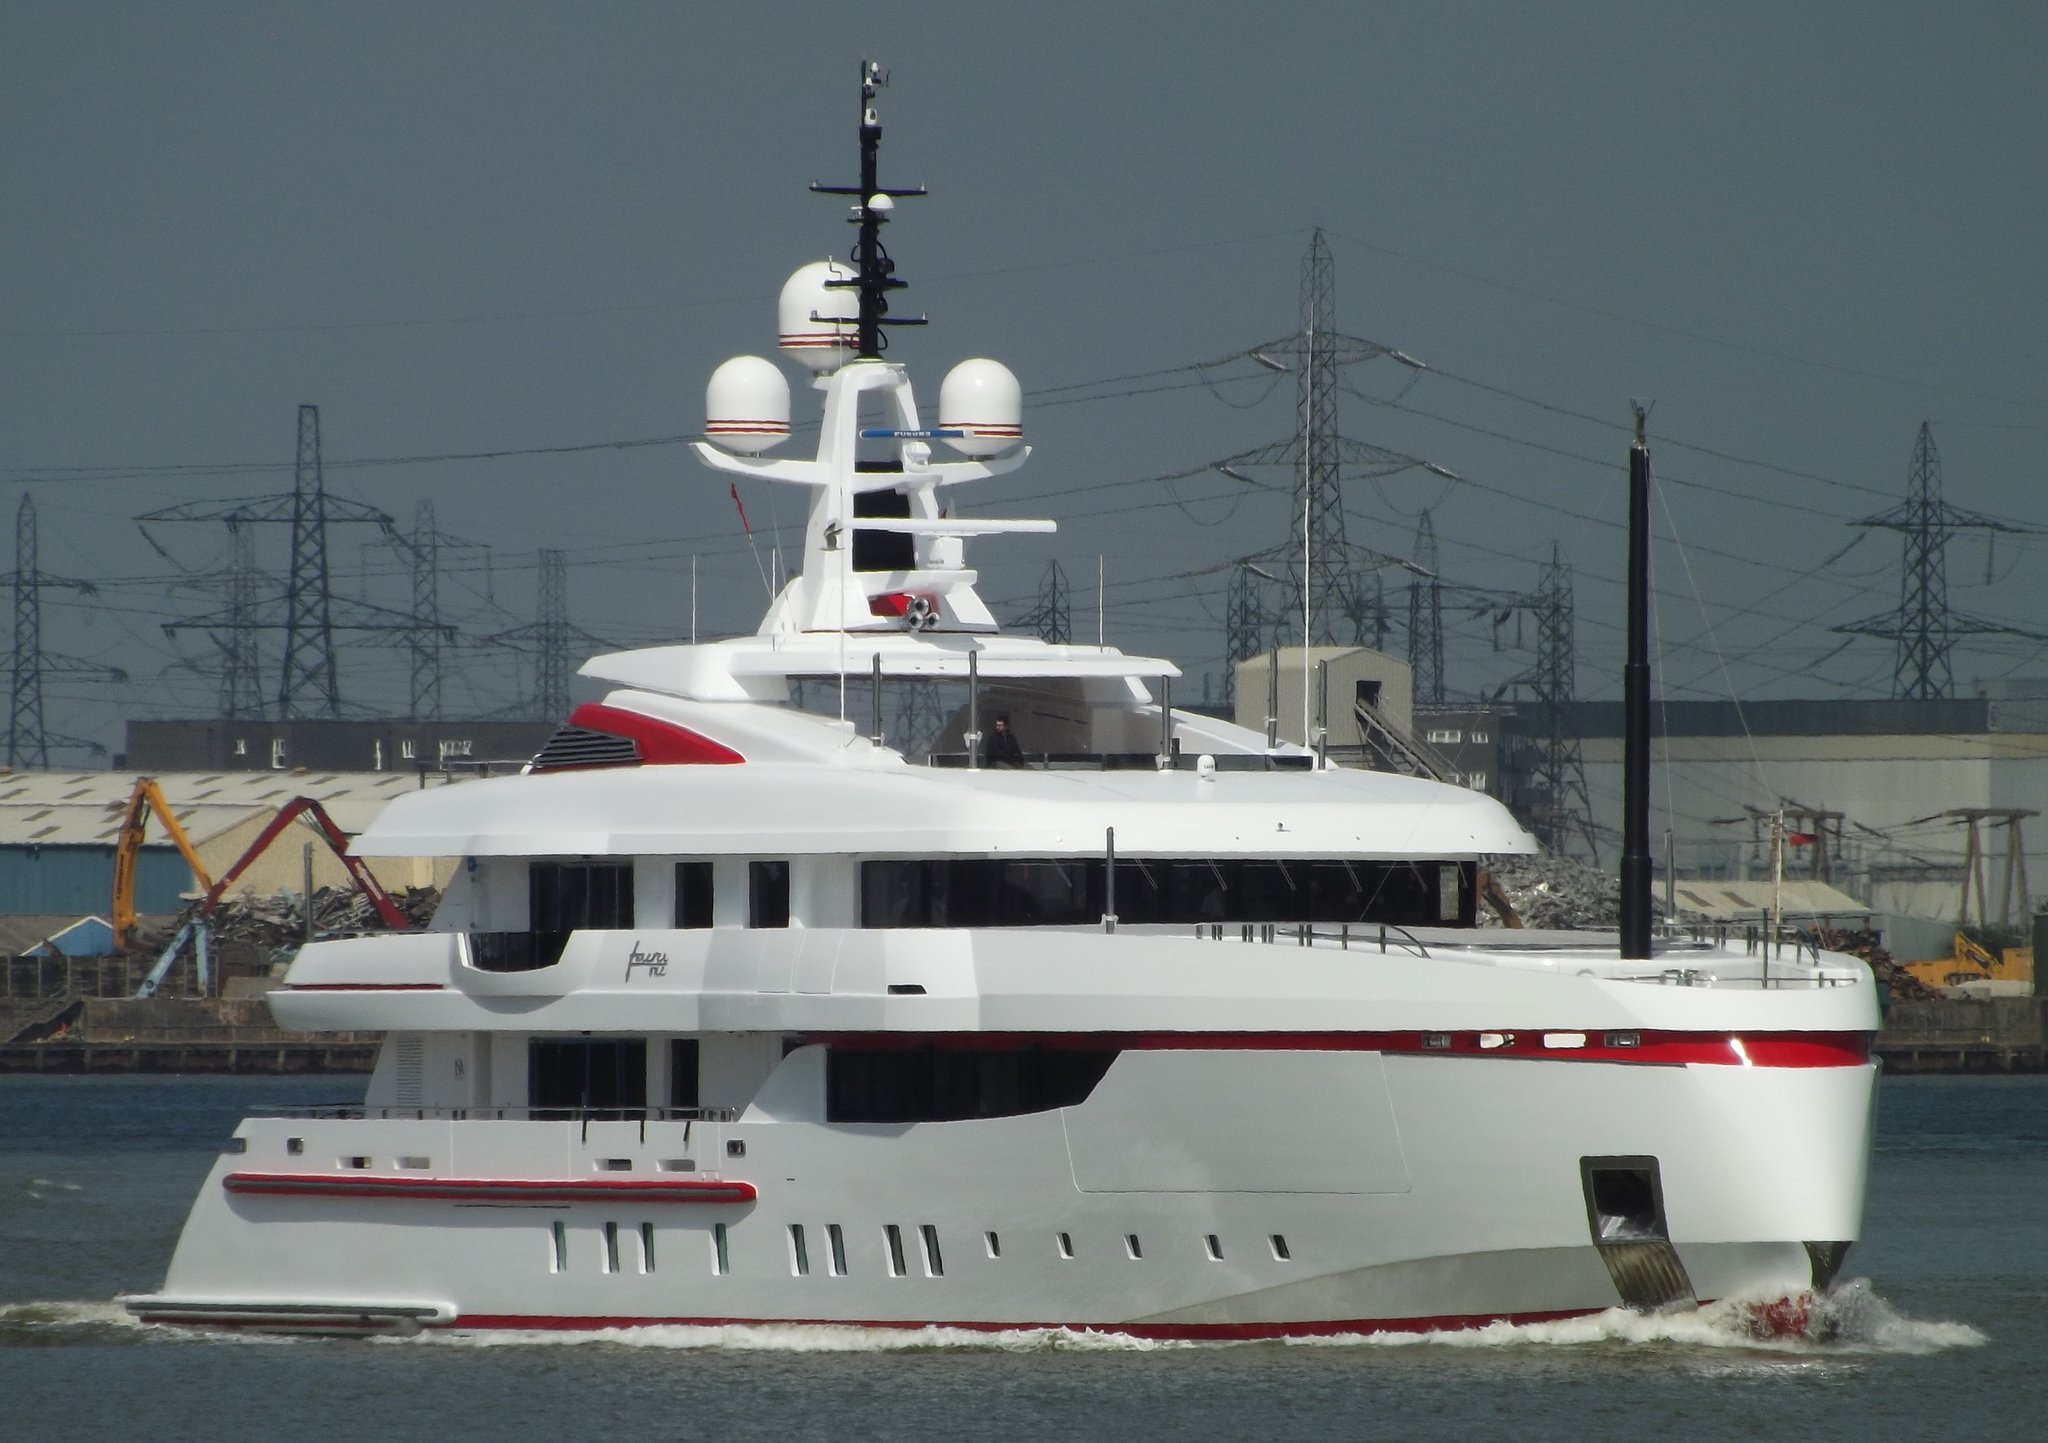 FOREVER ONE Yacht - ISA Yachts - 2014 - 55m - Propietario Bruce Grossman